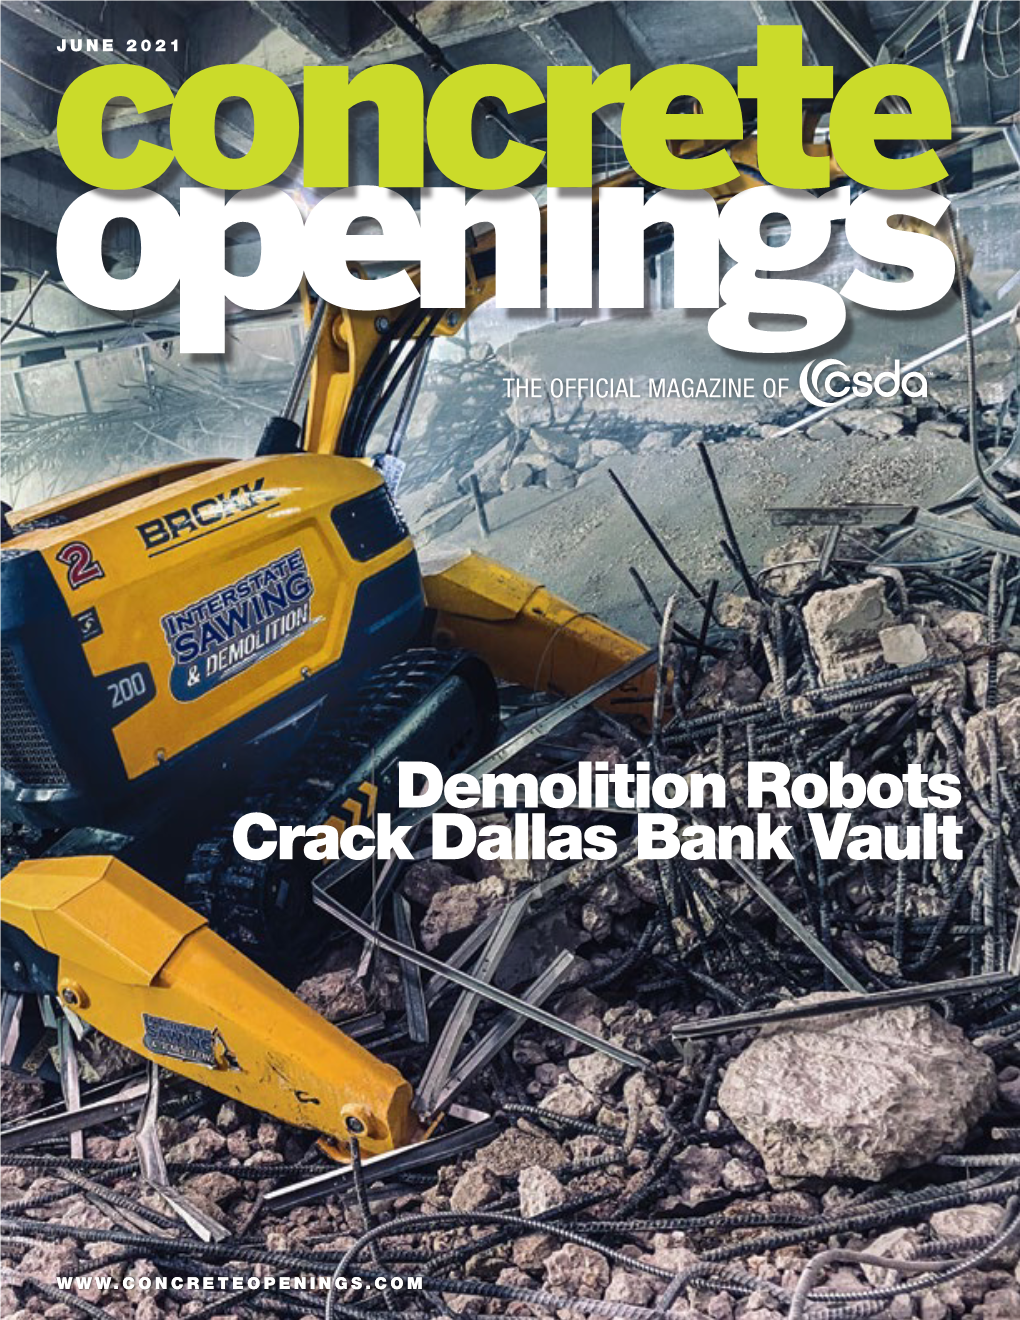 Demolition Robots Crack Dallas Bank Vault